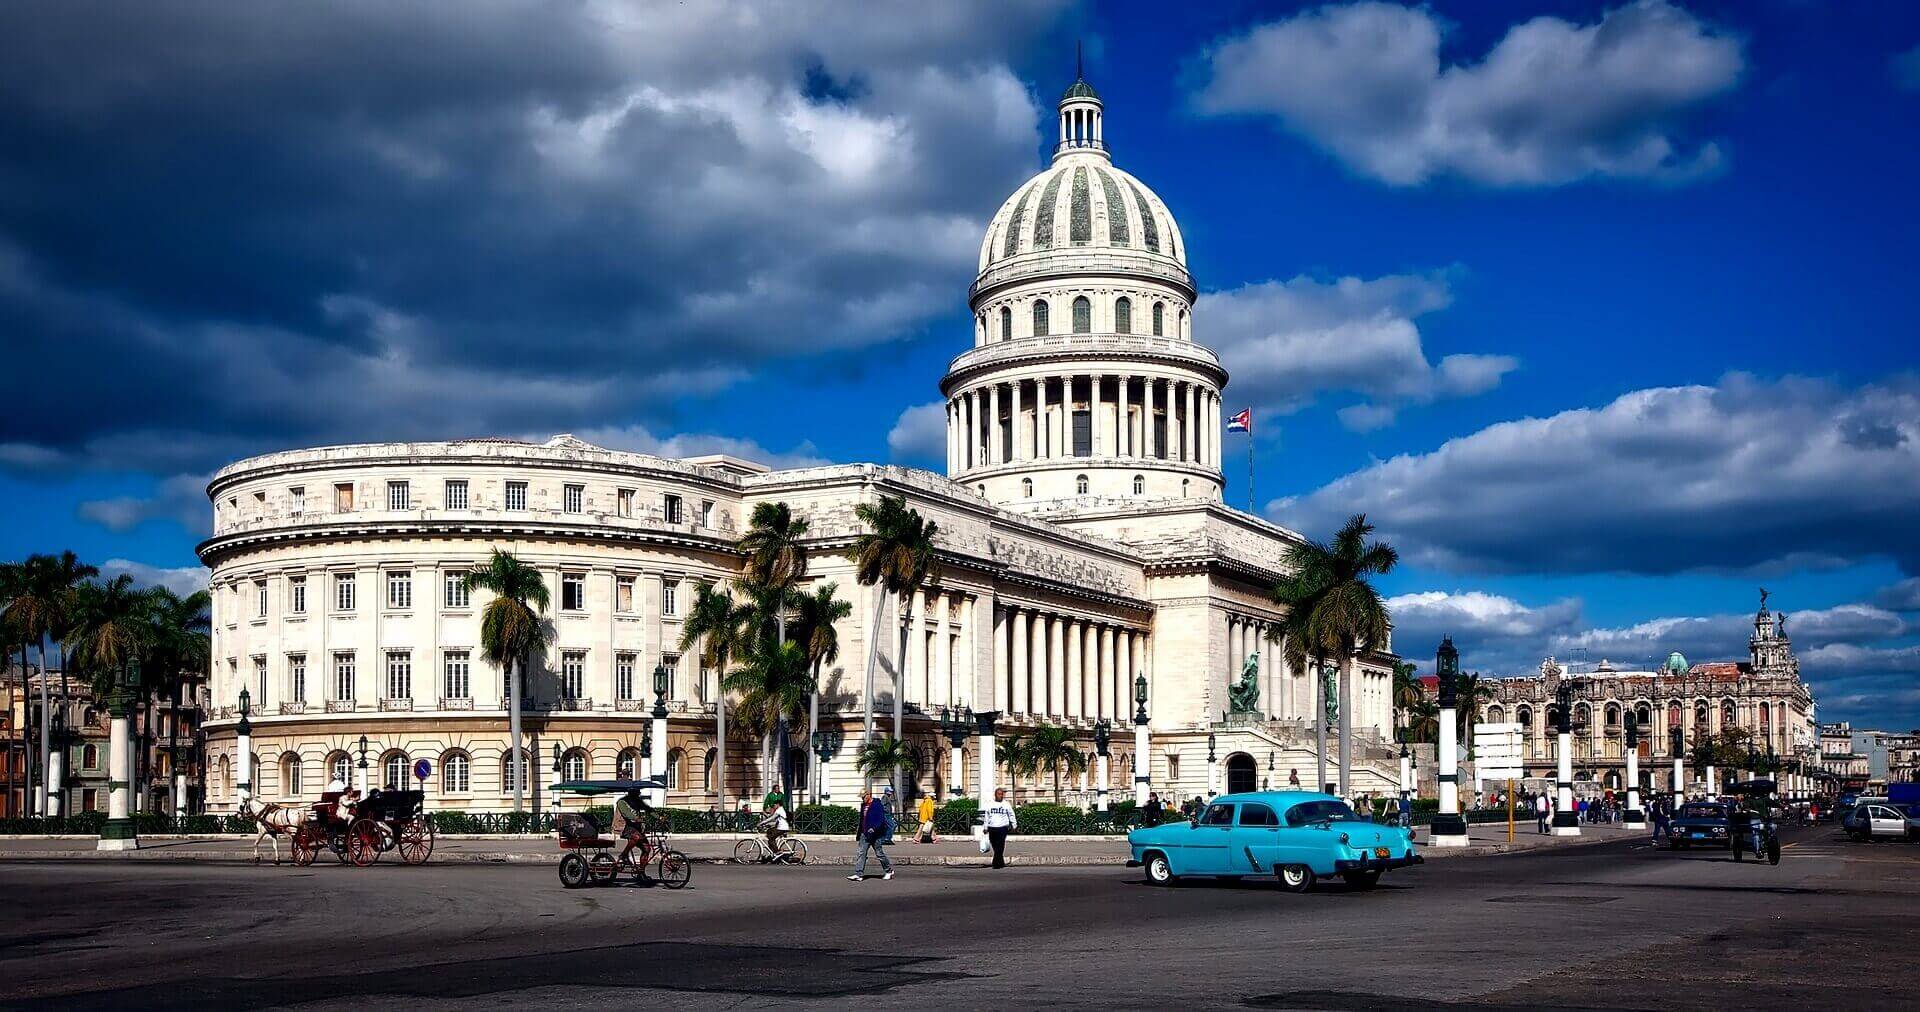 Capitol building Havana Cuba